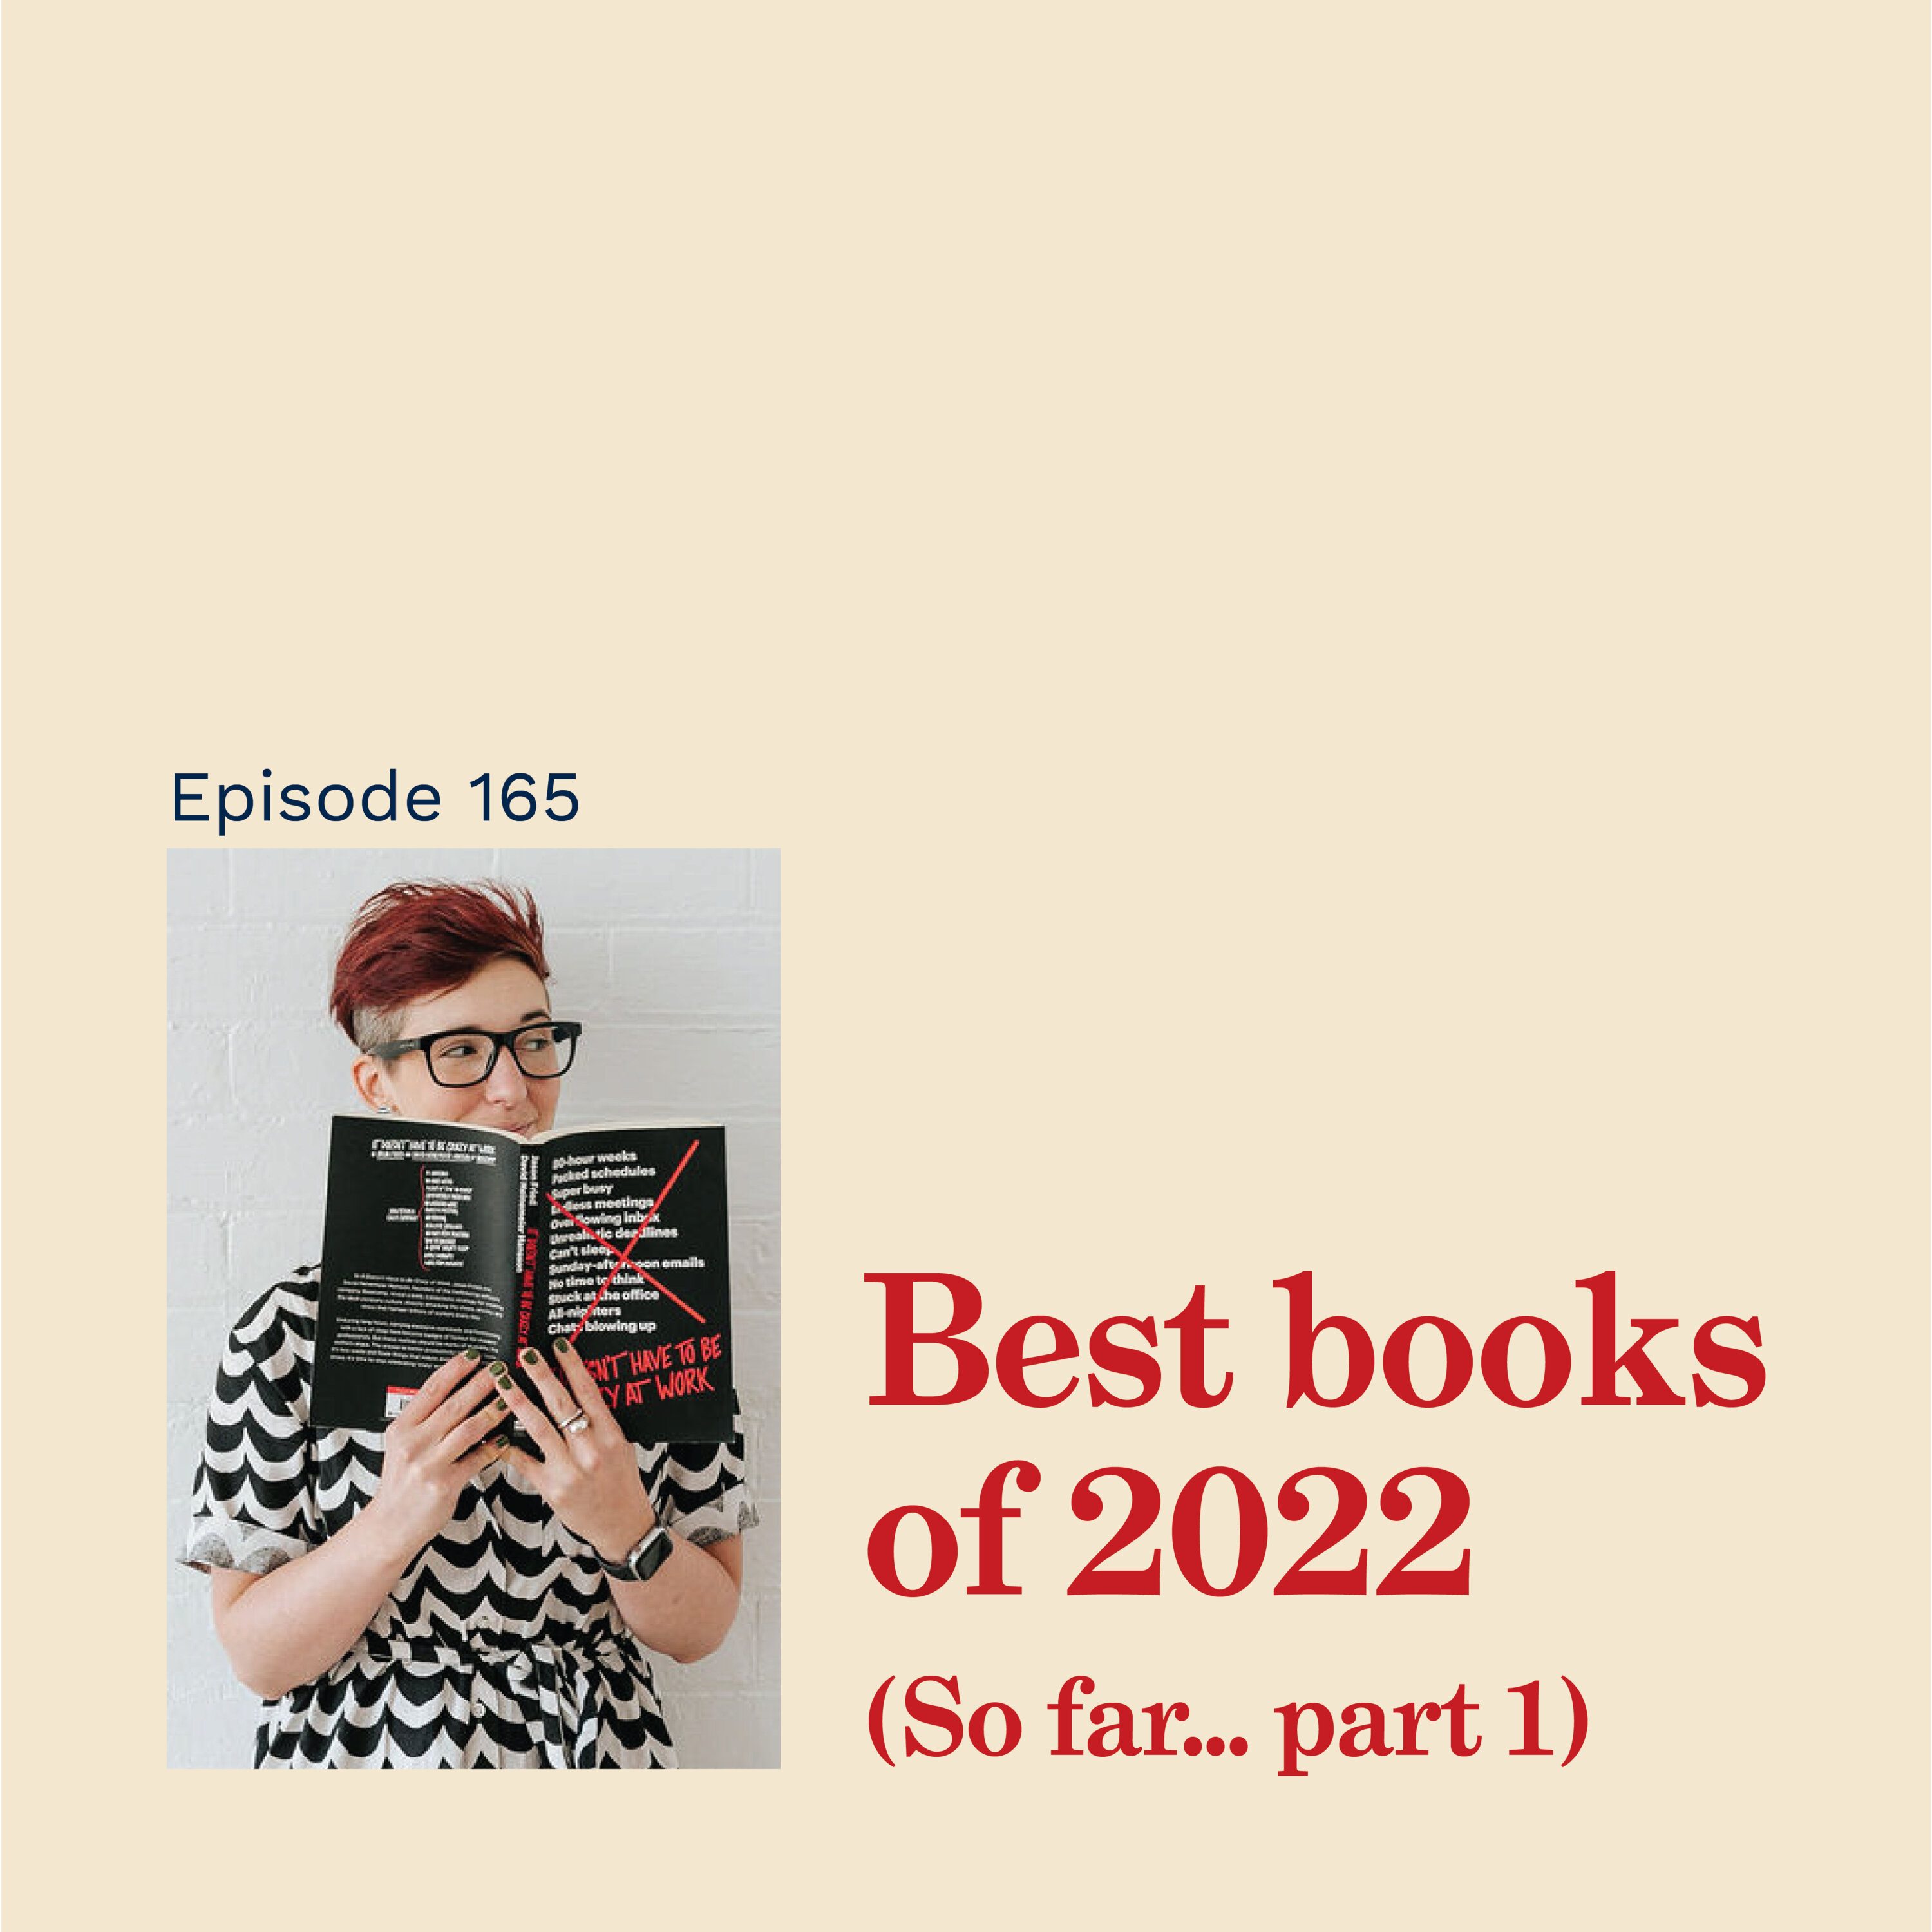 Best books of 2022... so far (part 1) Image